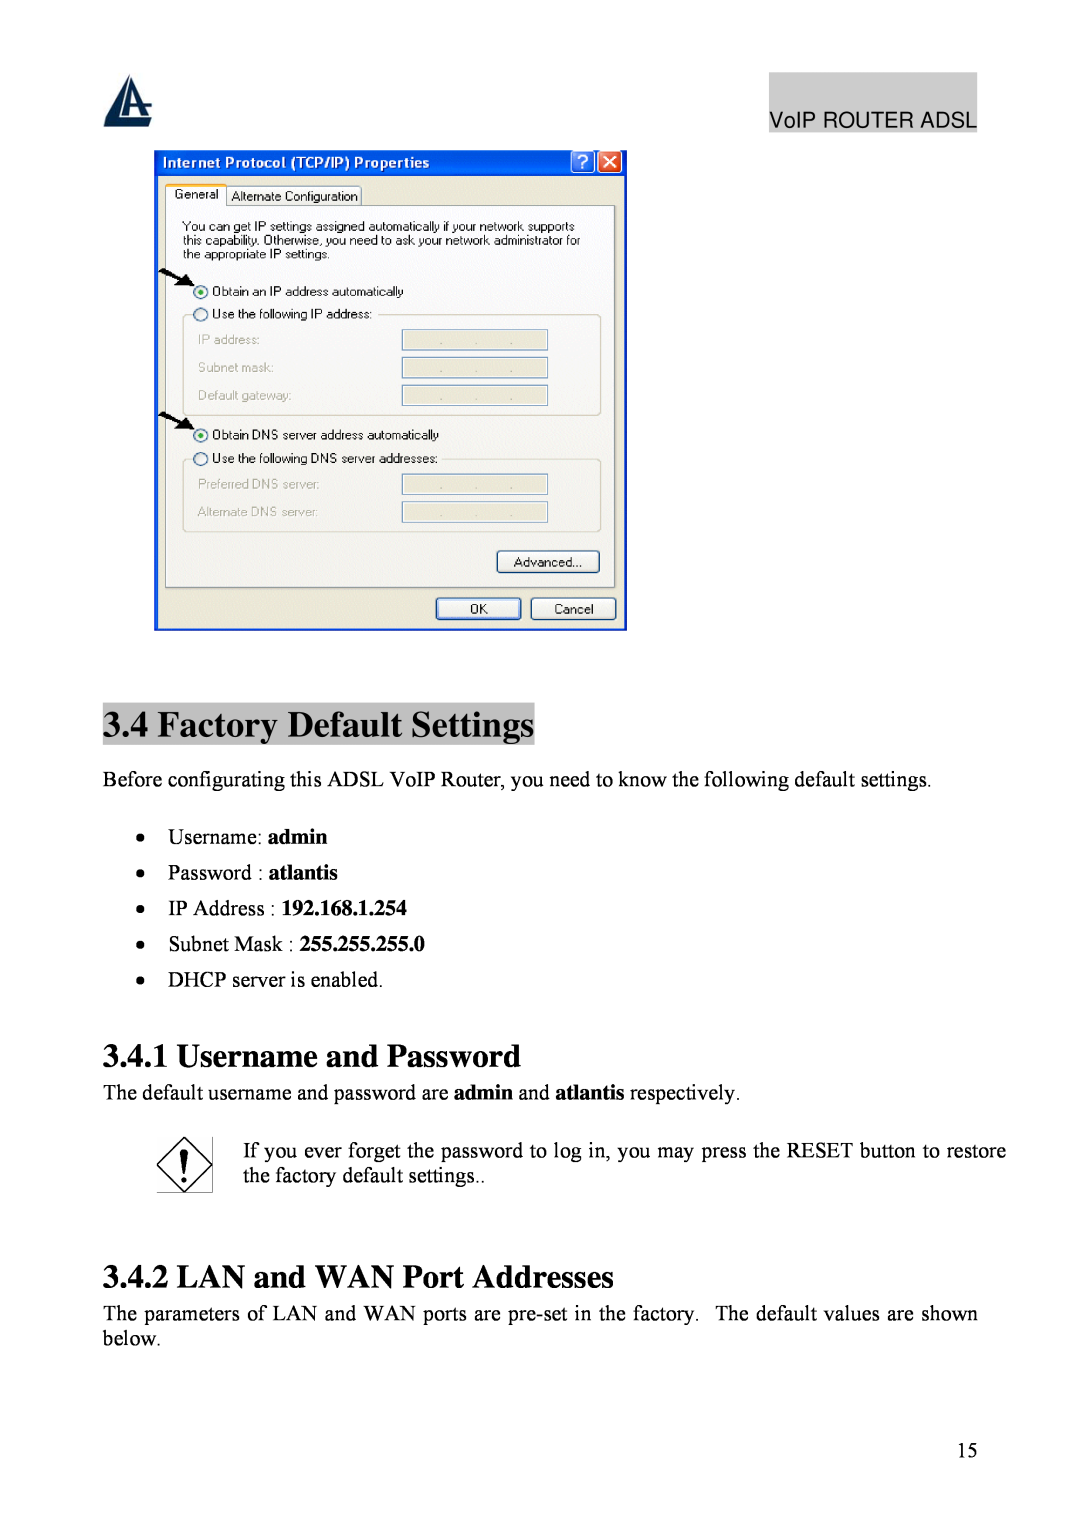 Atlantis Land A02-RAV211 manual Factory Default Settings, Username and Password, LAN and WAN Port Addresses 